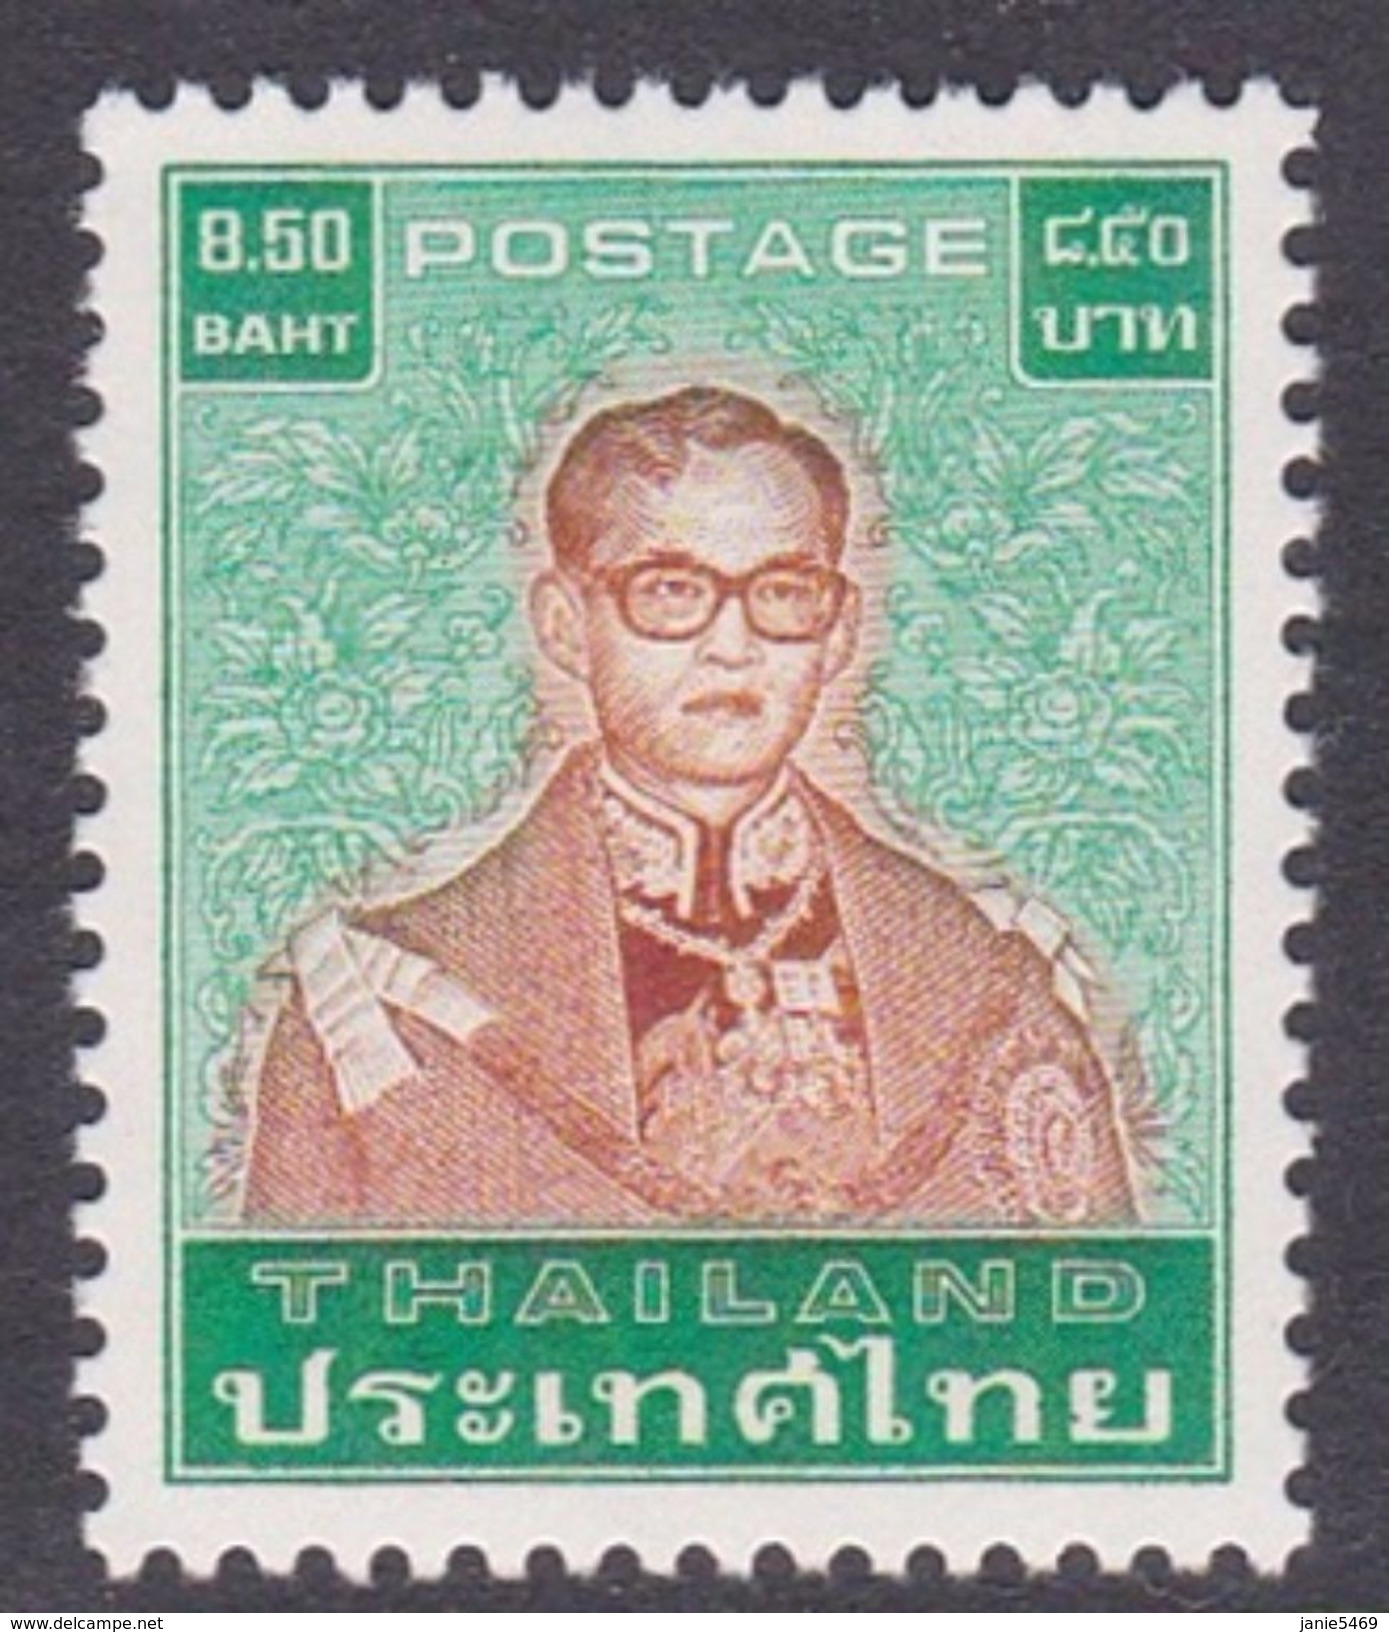 Thailand SG 1045 1985 King Bhumipol 8 Baht 50s Perf 13x 13.5 MNH - Thailand